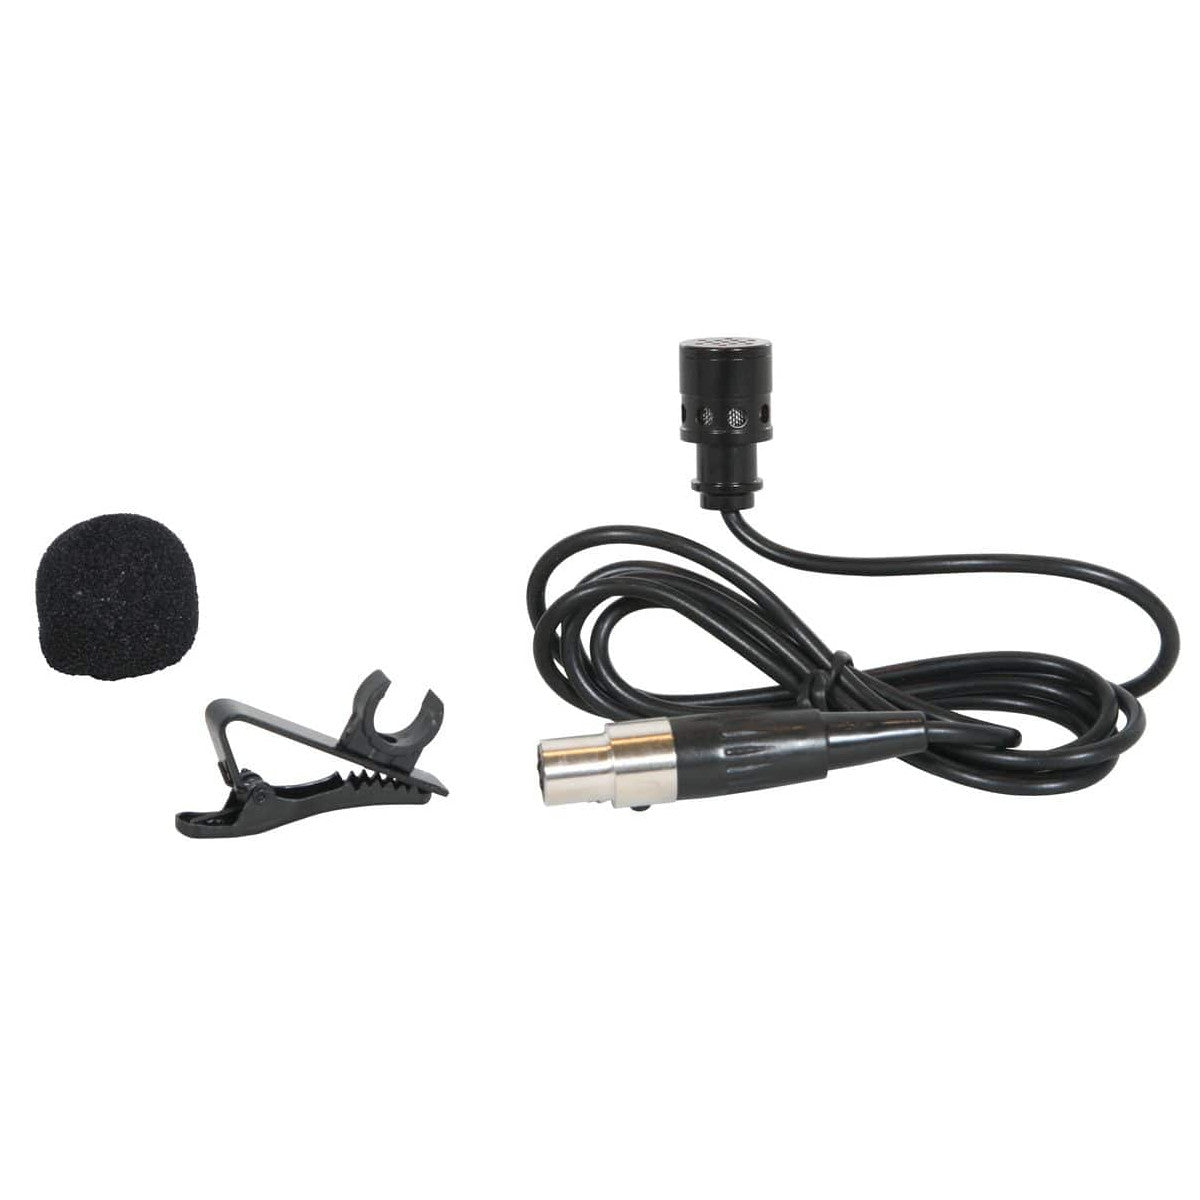 Galaxy LV-U3BK Unidirectional Lavalier Lapel Microphone